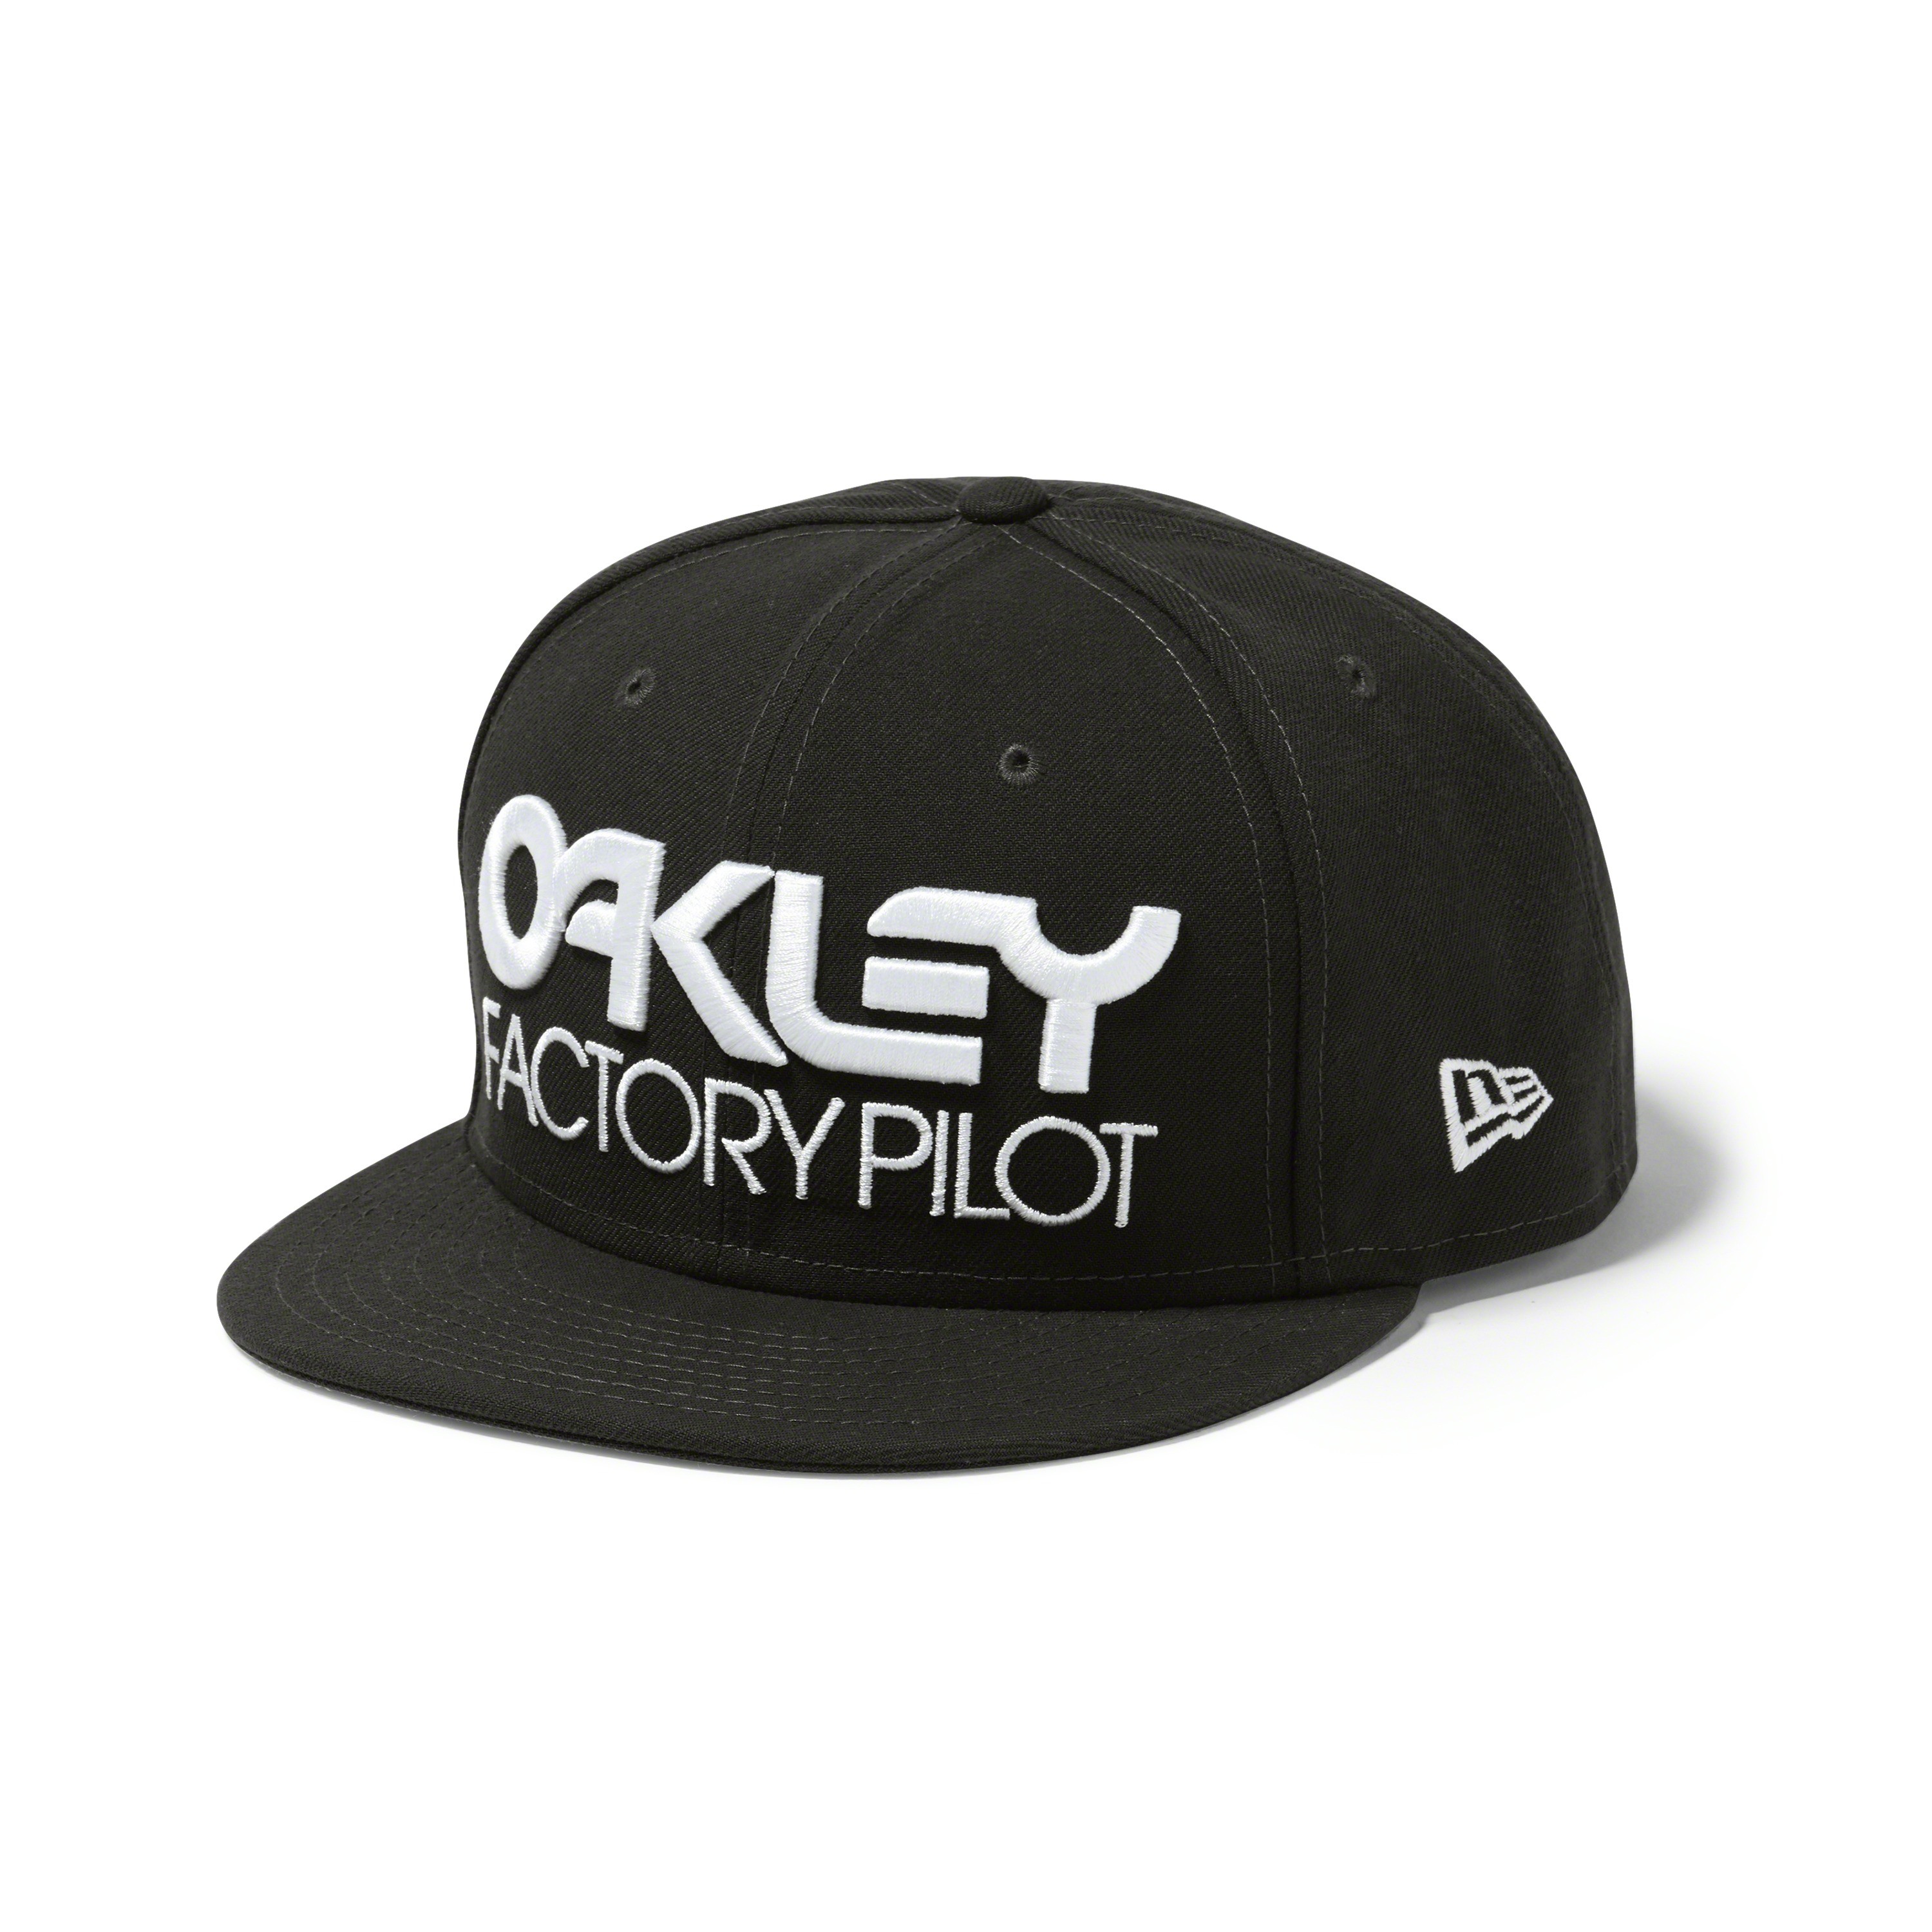 OAKLEY Factory Pilot Novelty Snap-Back Cap Jet Black